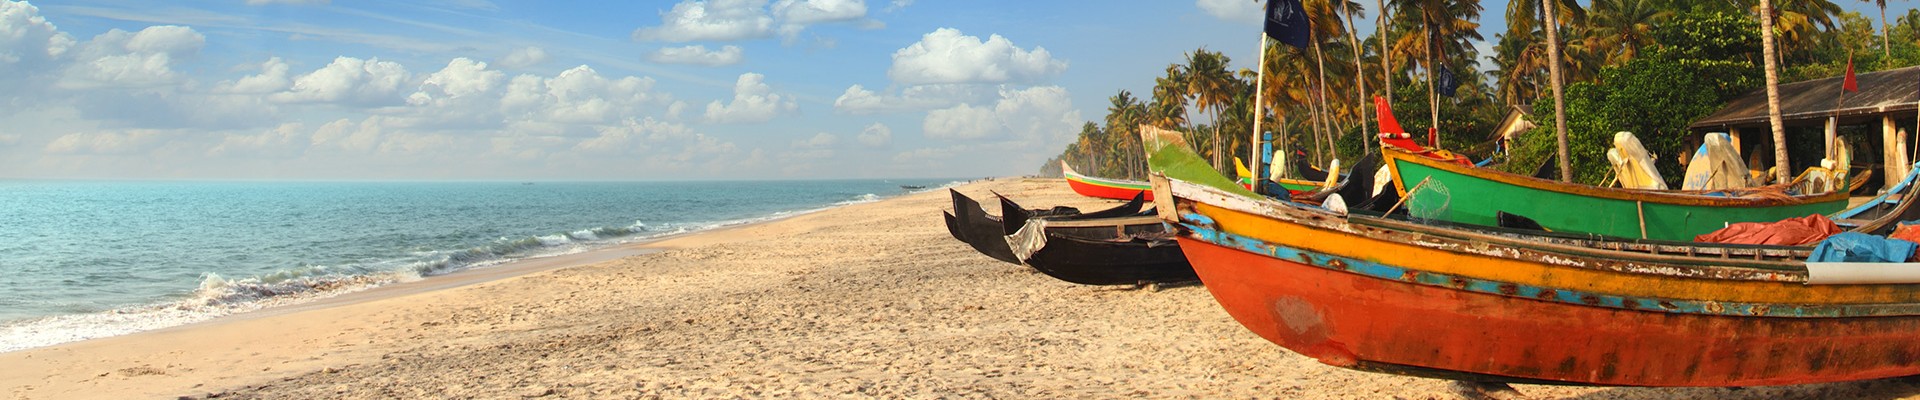 Kerala Beach Experience - India Package (7 nights)